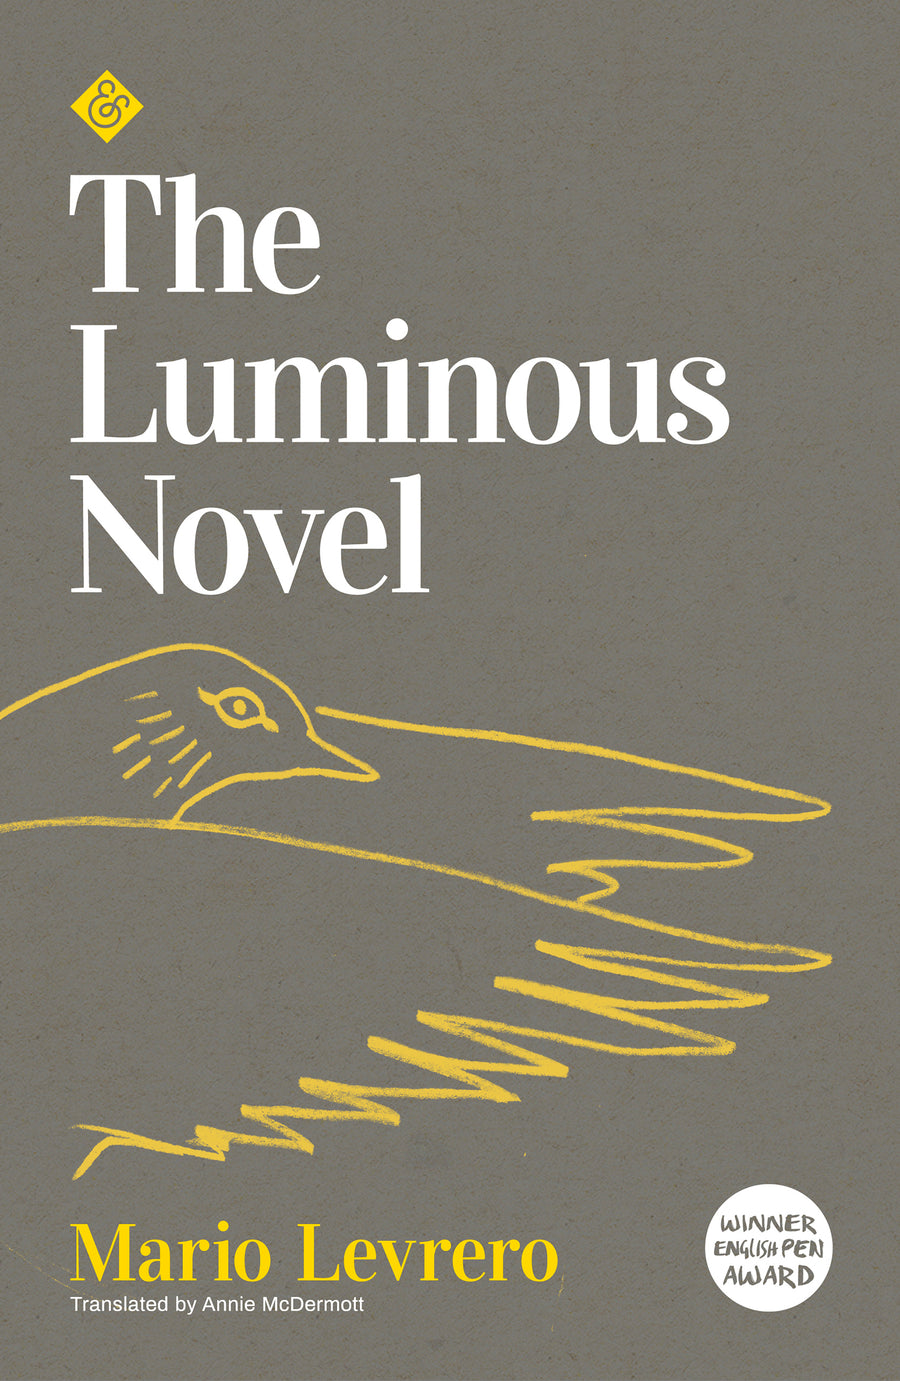 The Luminous Novel